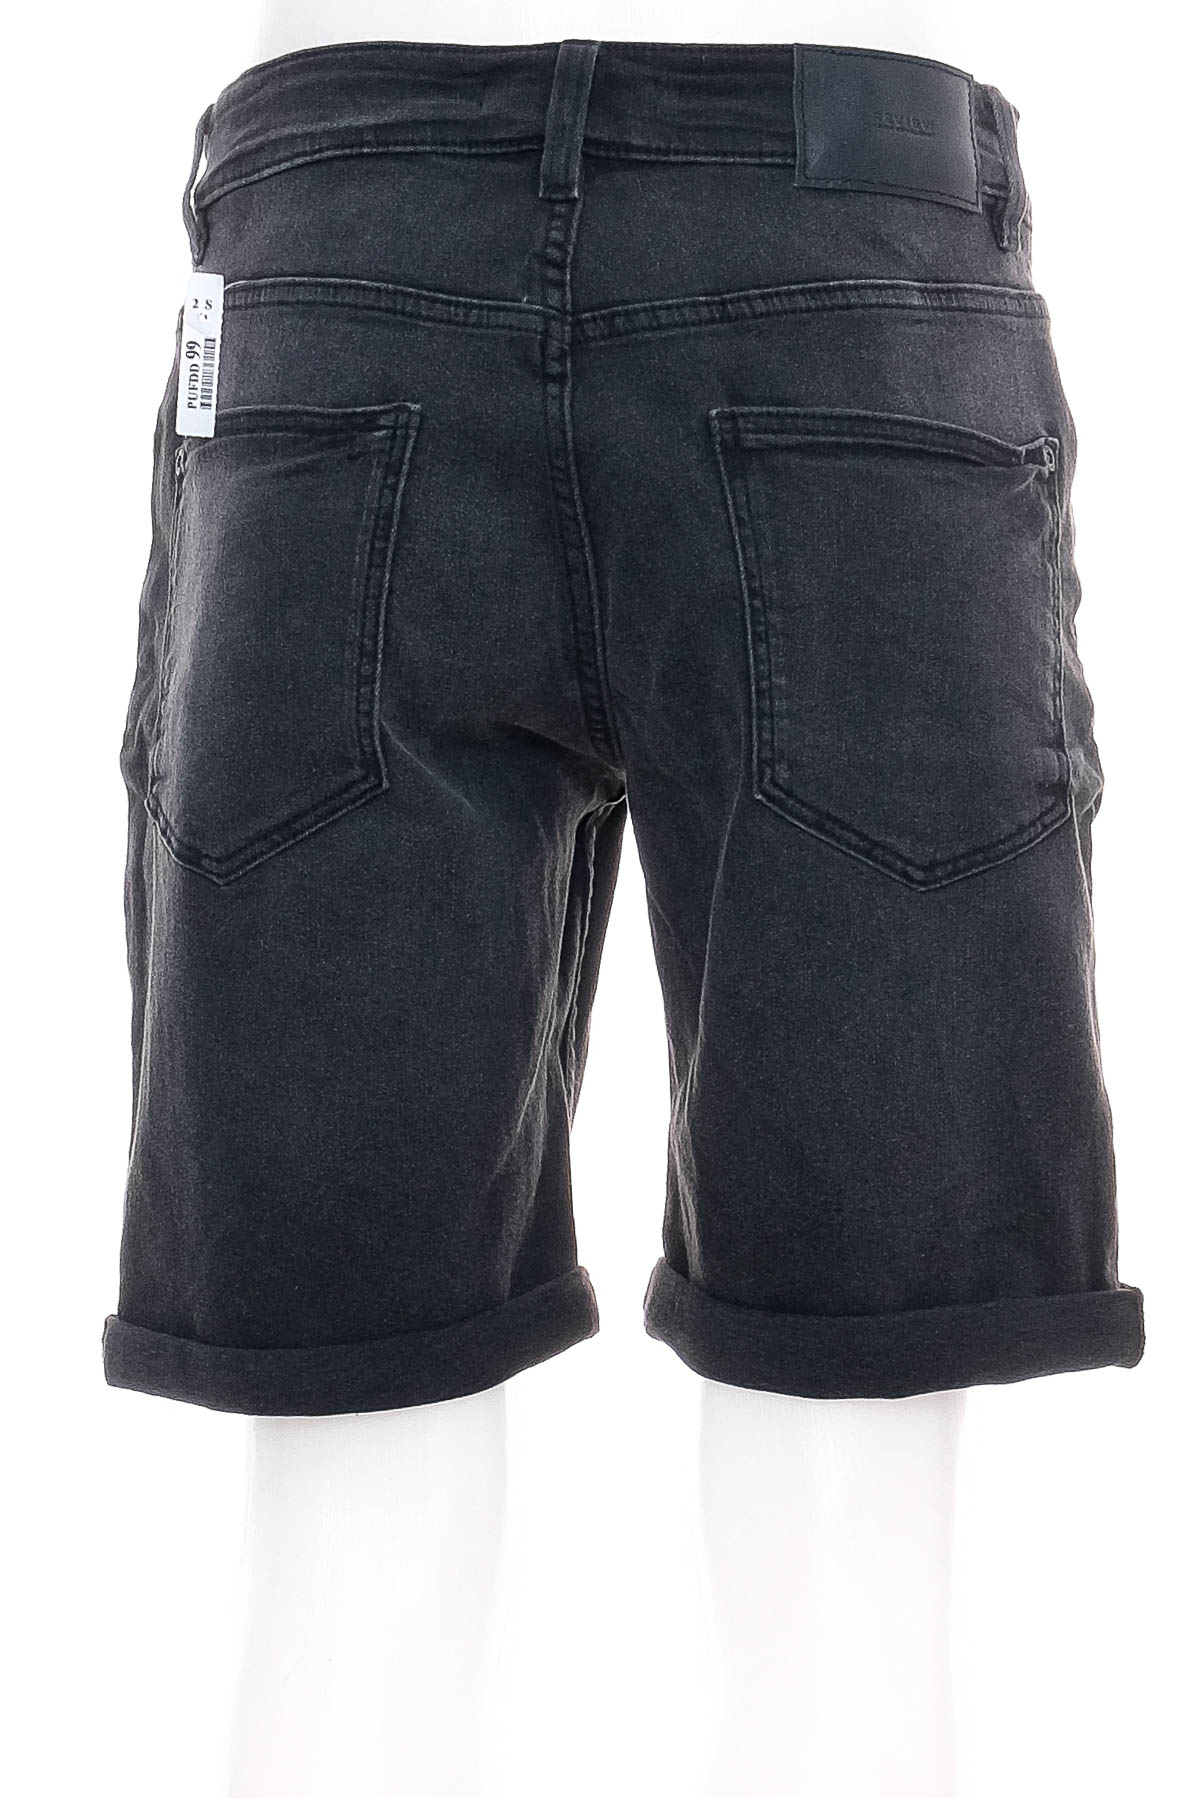 Men's shorts - REVIEW - 1